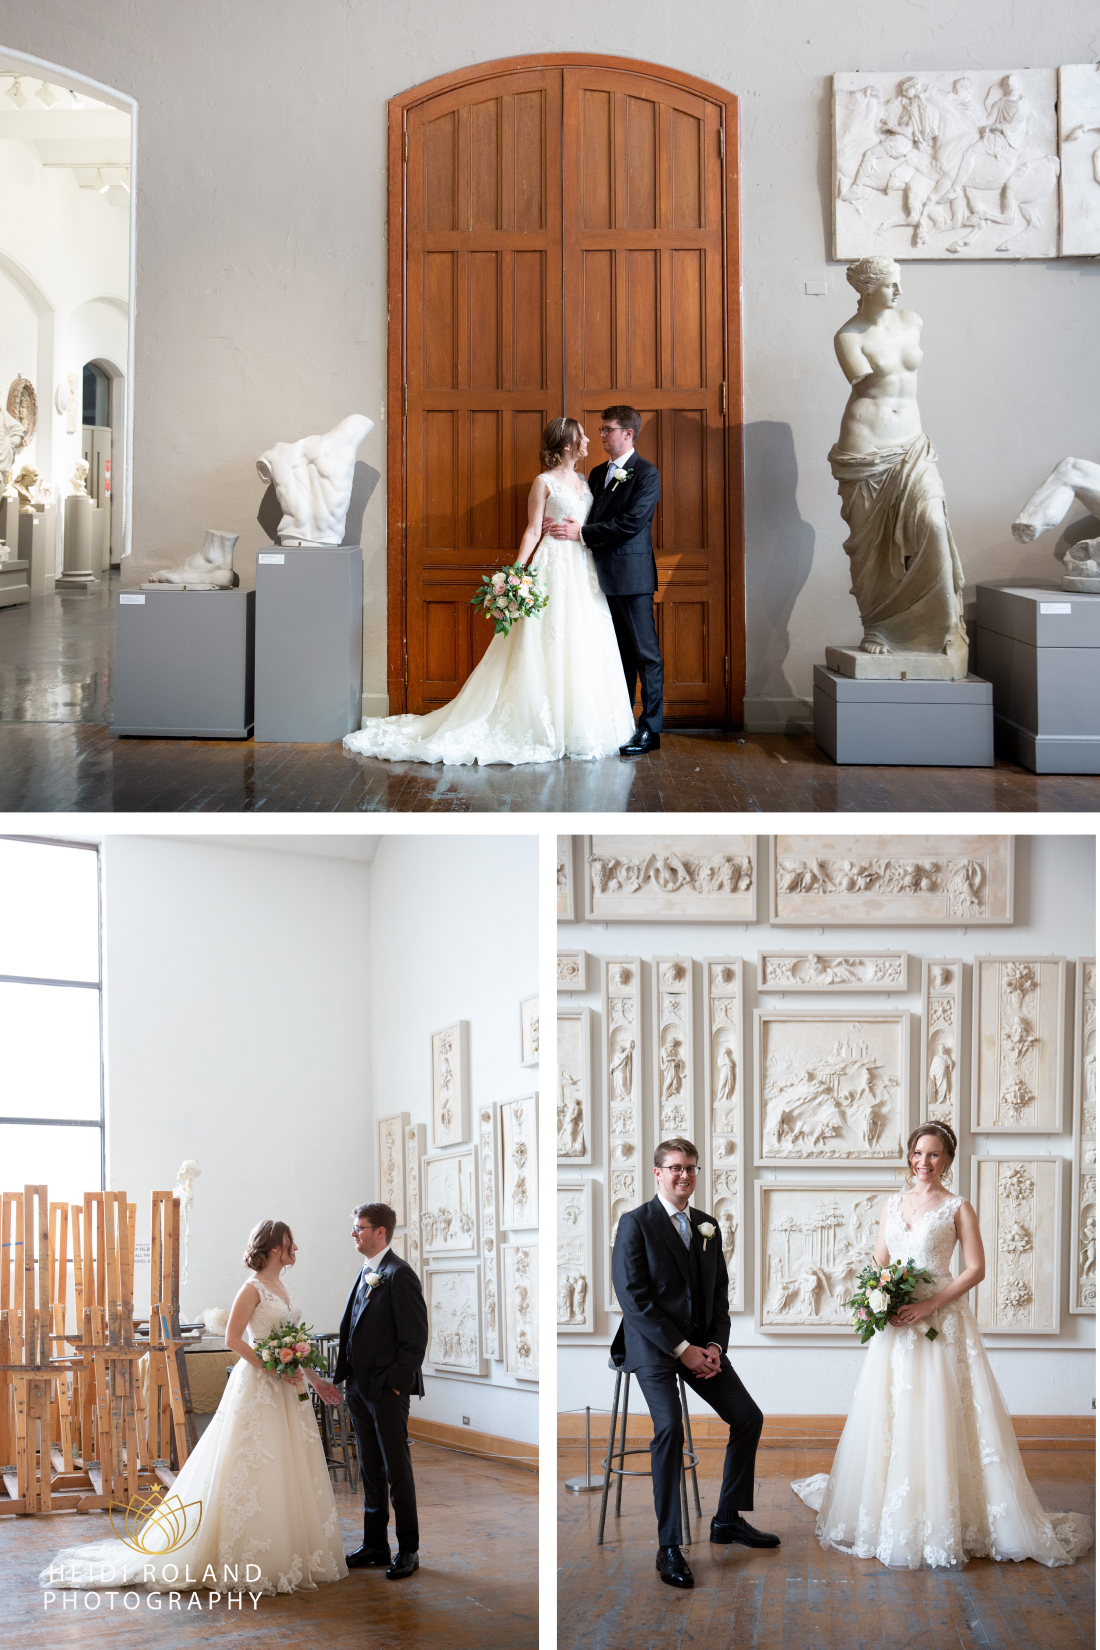 Pennsylvania Academy of the Fine Arts cast room bride and groom photos